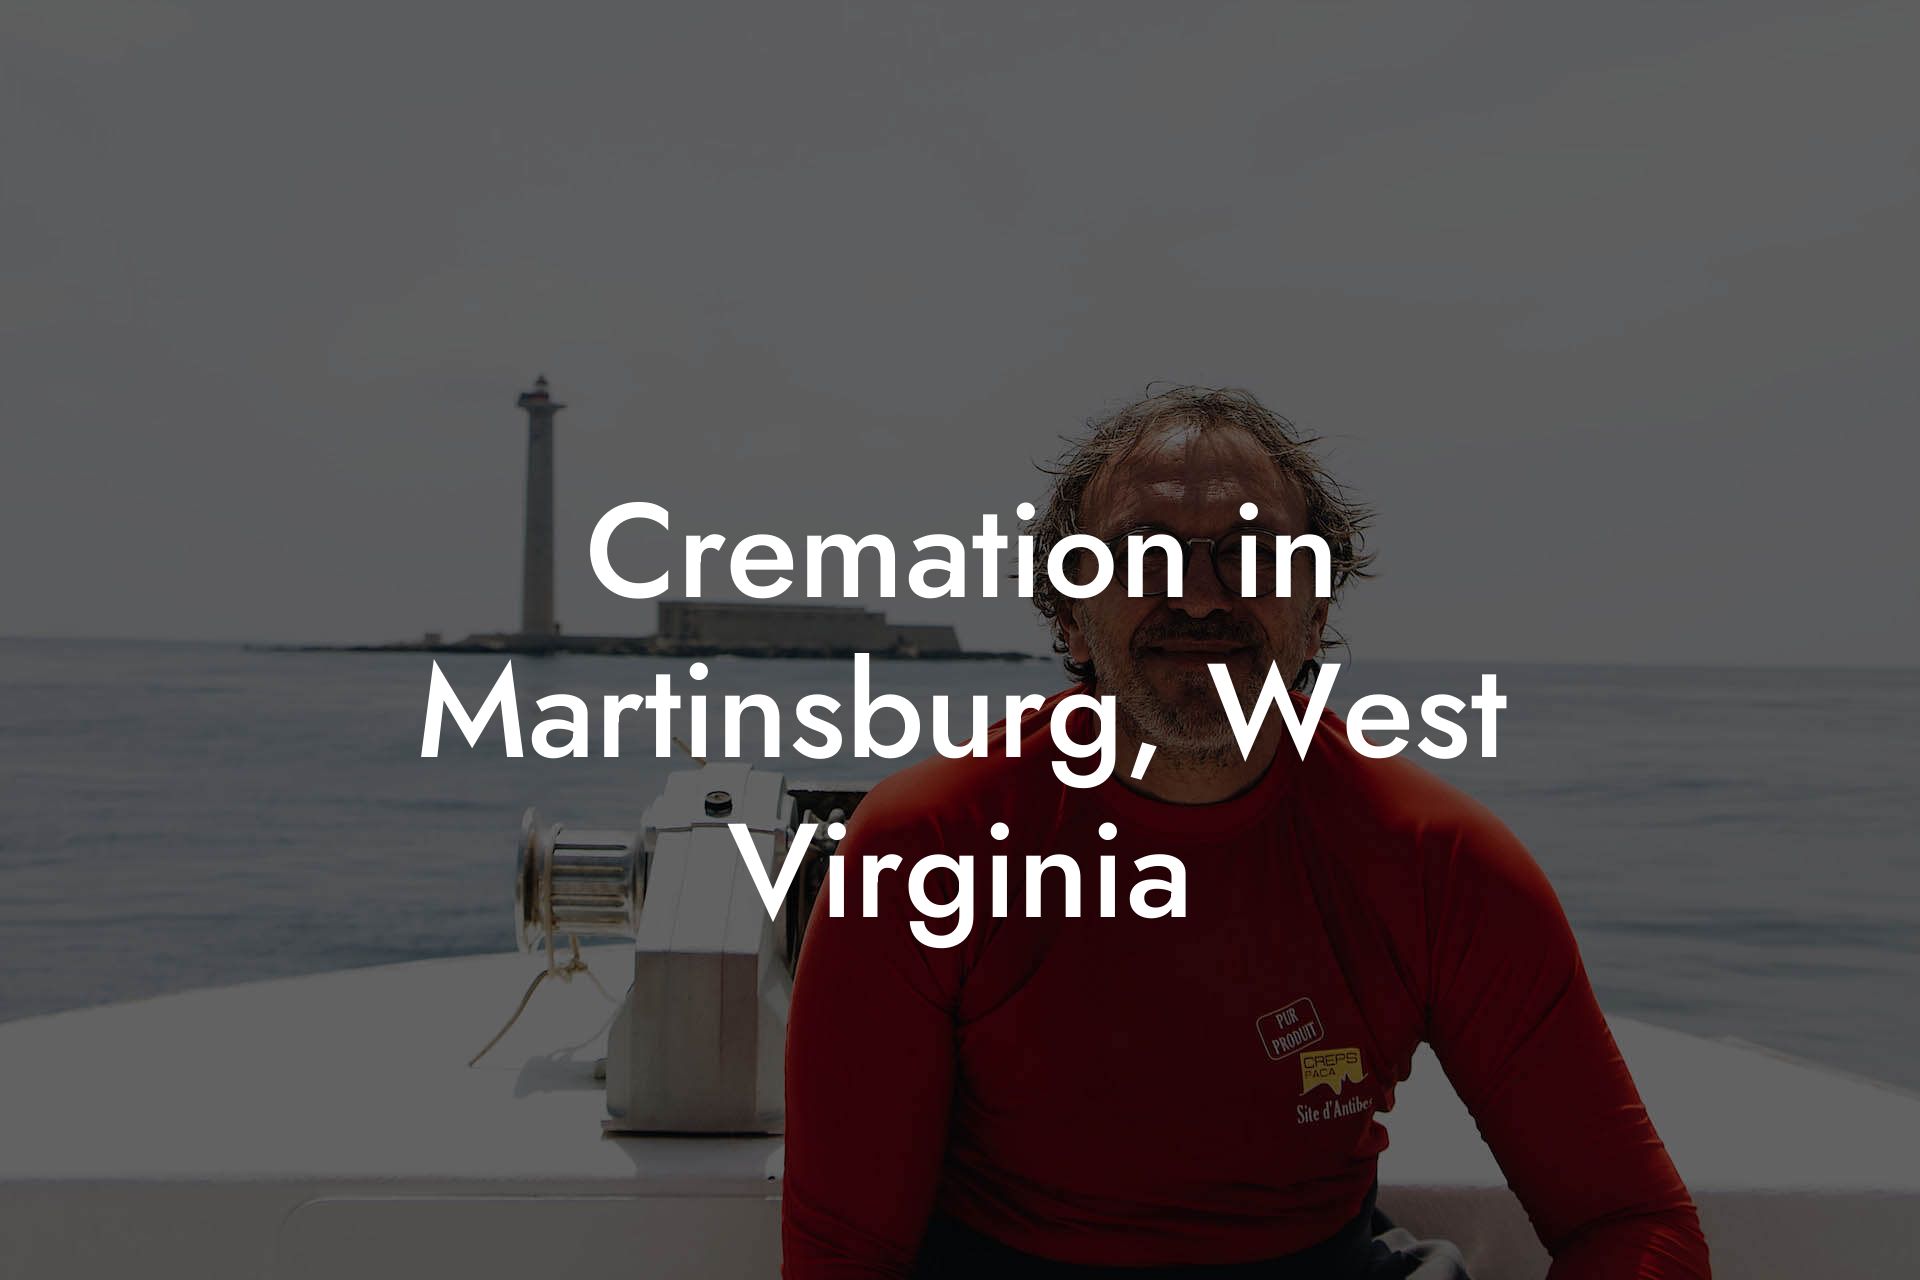 Cremation in Martinsburg, West Virginia